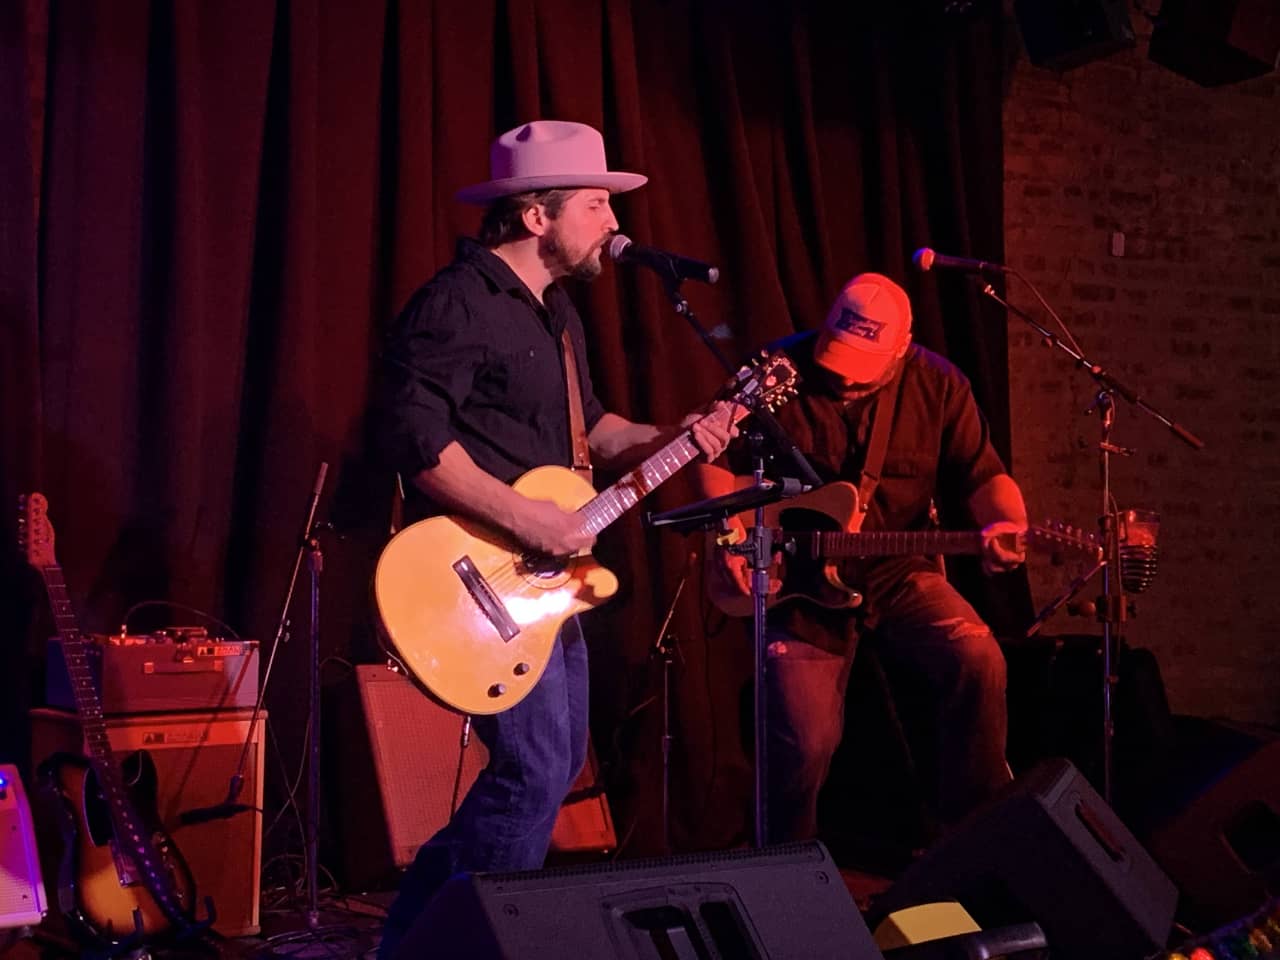 Two guitar players performing at Carol's Pub